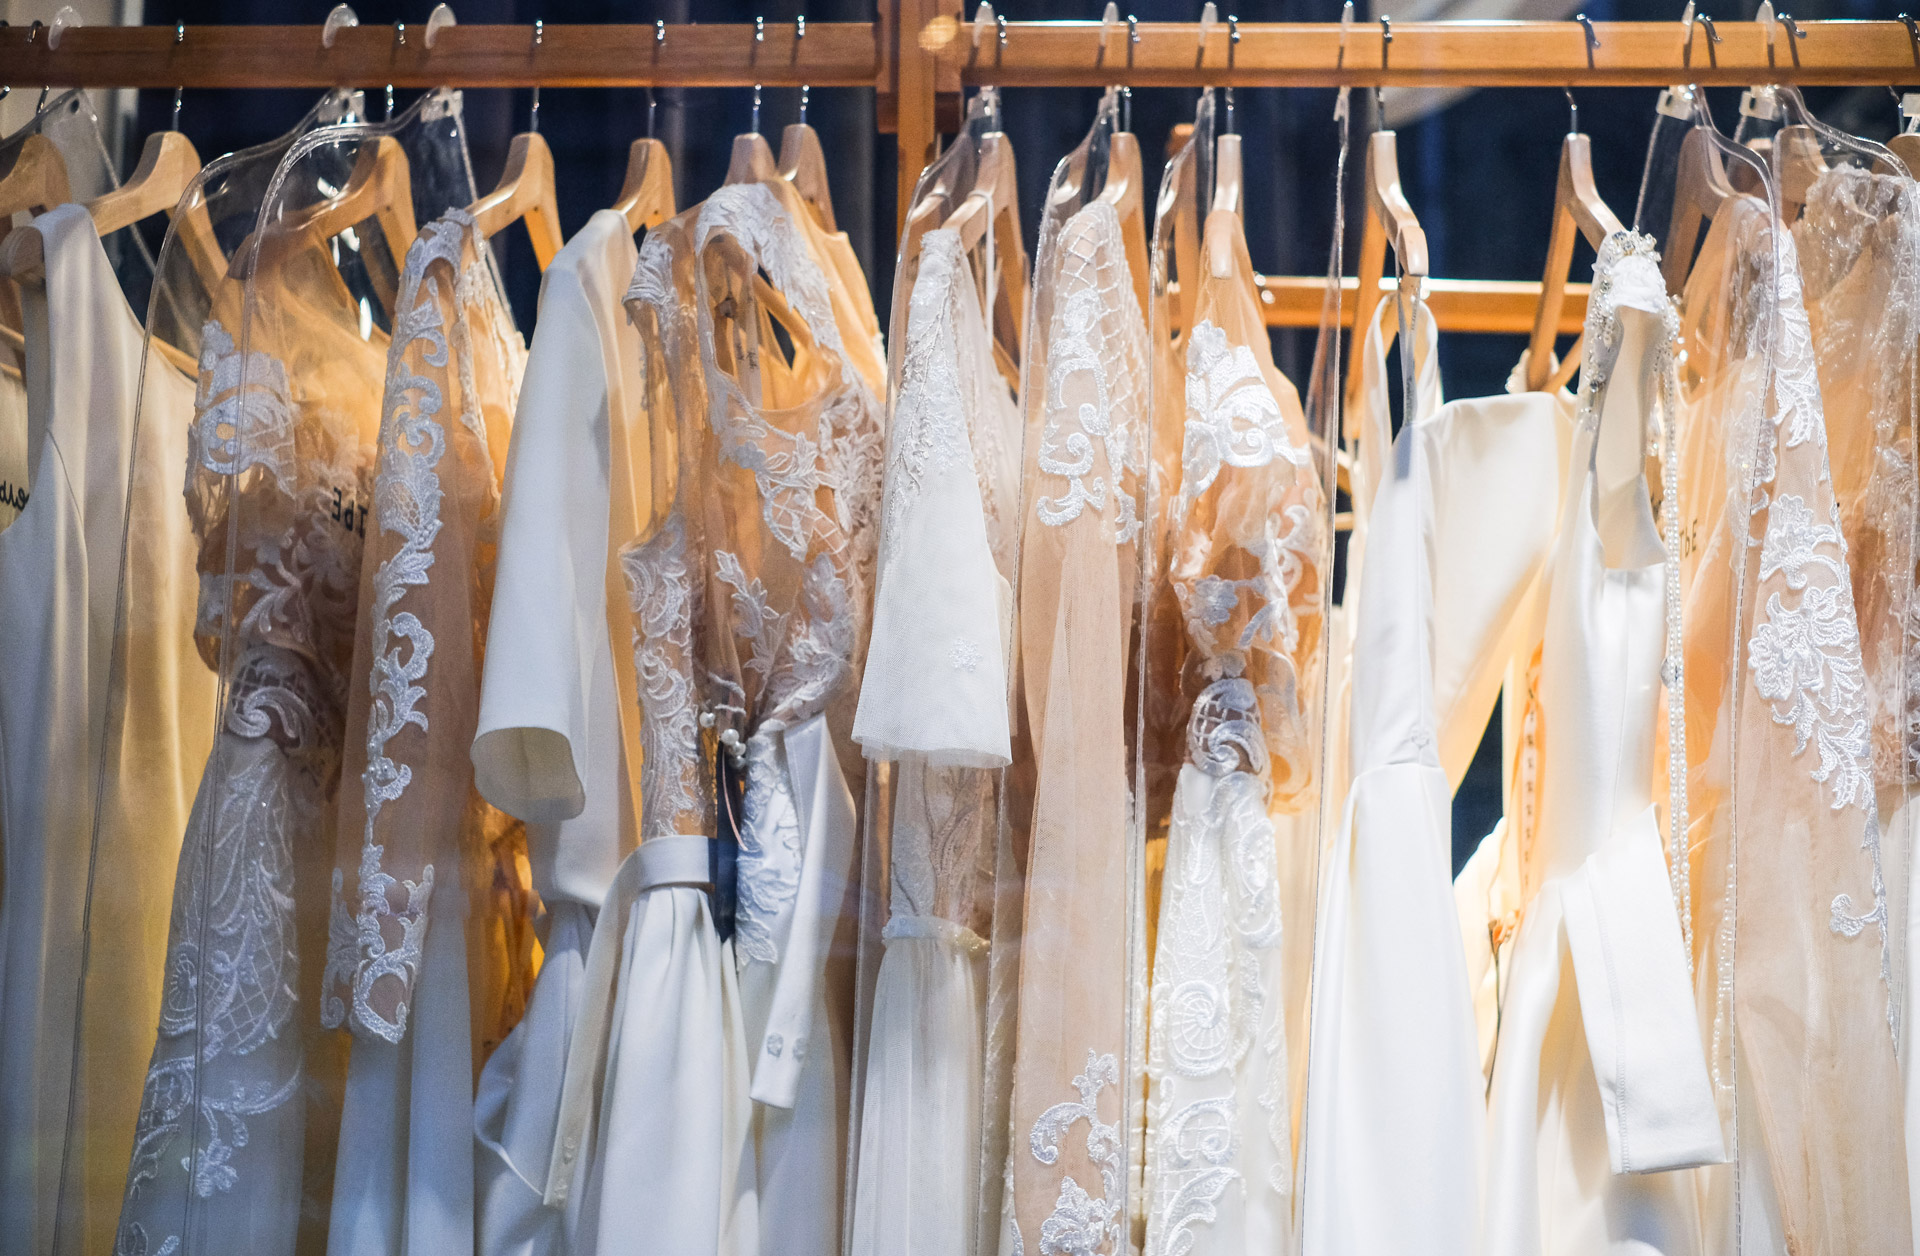 white wedding dresses background texture 2022 11 09 13 29 57 utc Wedding Dress Preservation vs. Restoration